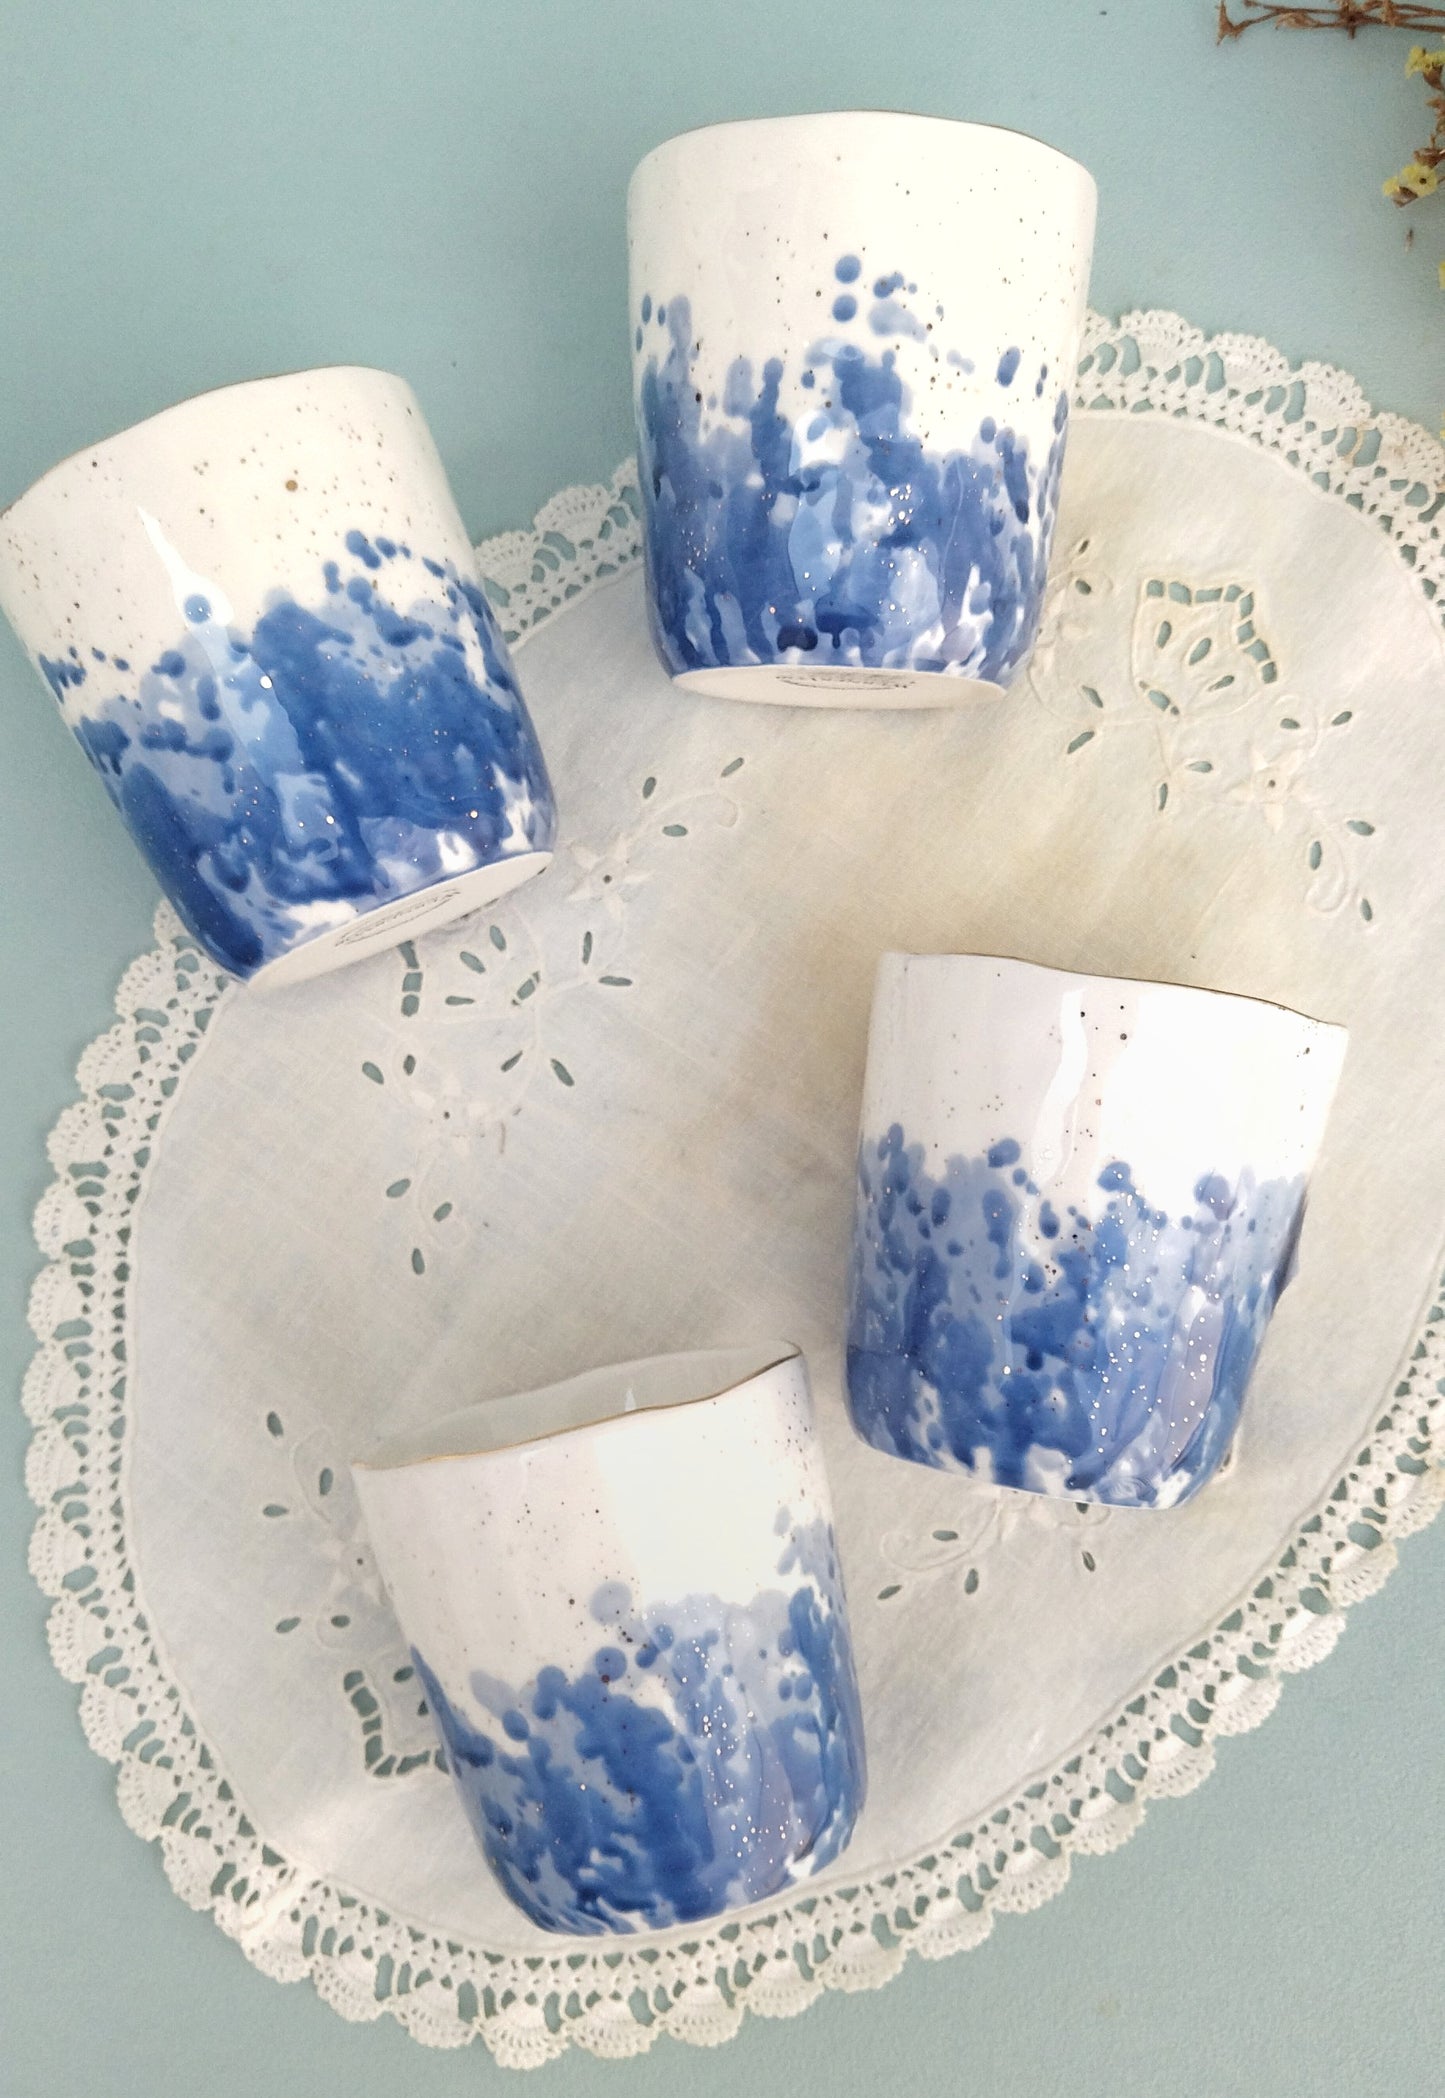 Gold Ceramic Rimmed Cups, White Porcelain Cup With Cobalt Splashes, Set Of 4